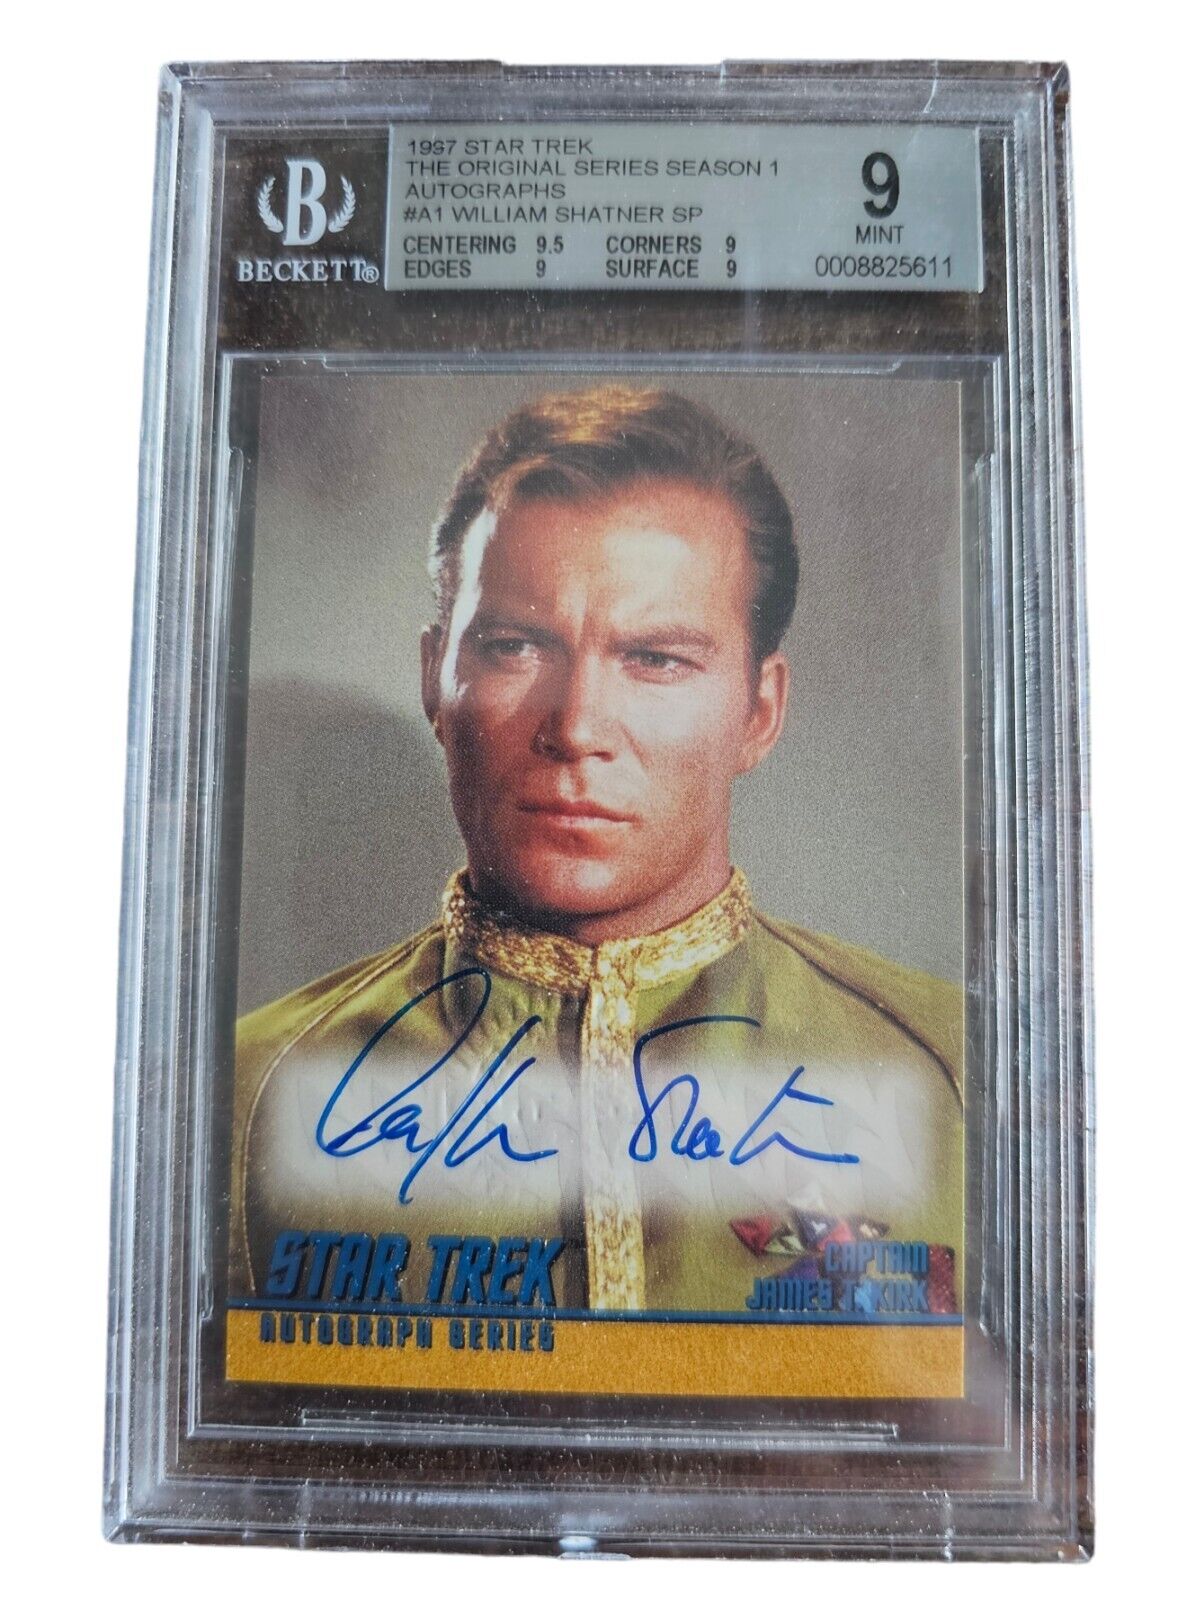 STAR TREK Original Series Autograph #A1 William Shatner as Captain Kirk BGS 9/10